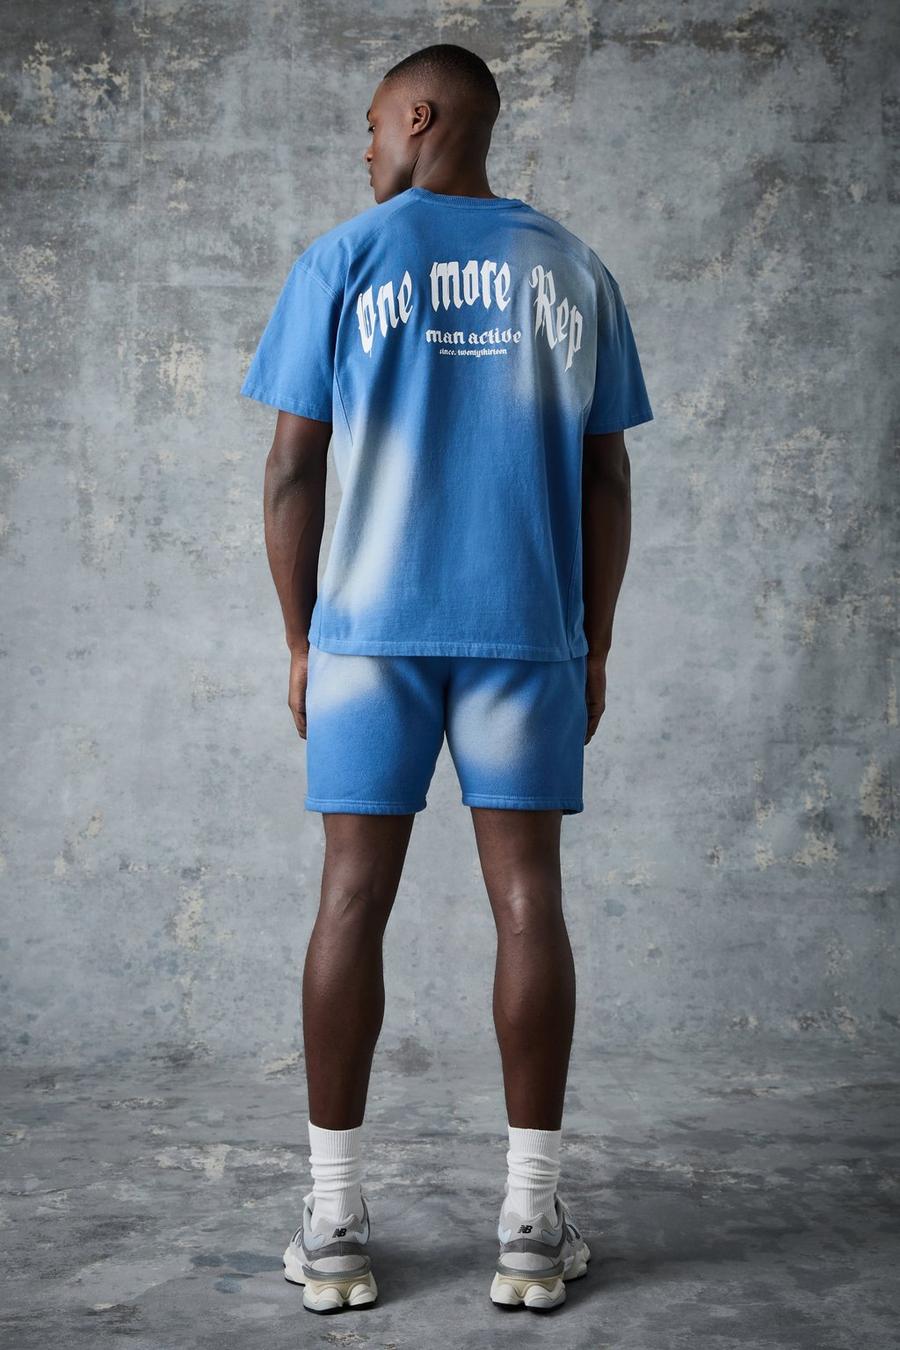 Blue Man Active Gebleekte Vintage One More Rep T-Shirt Set